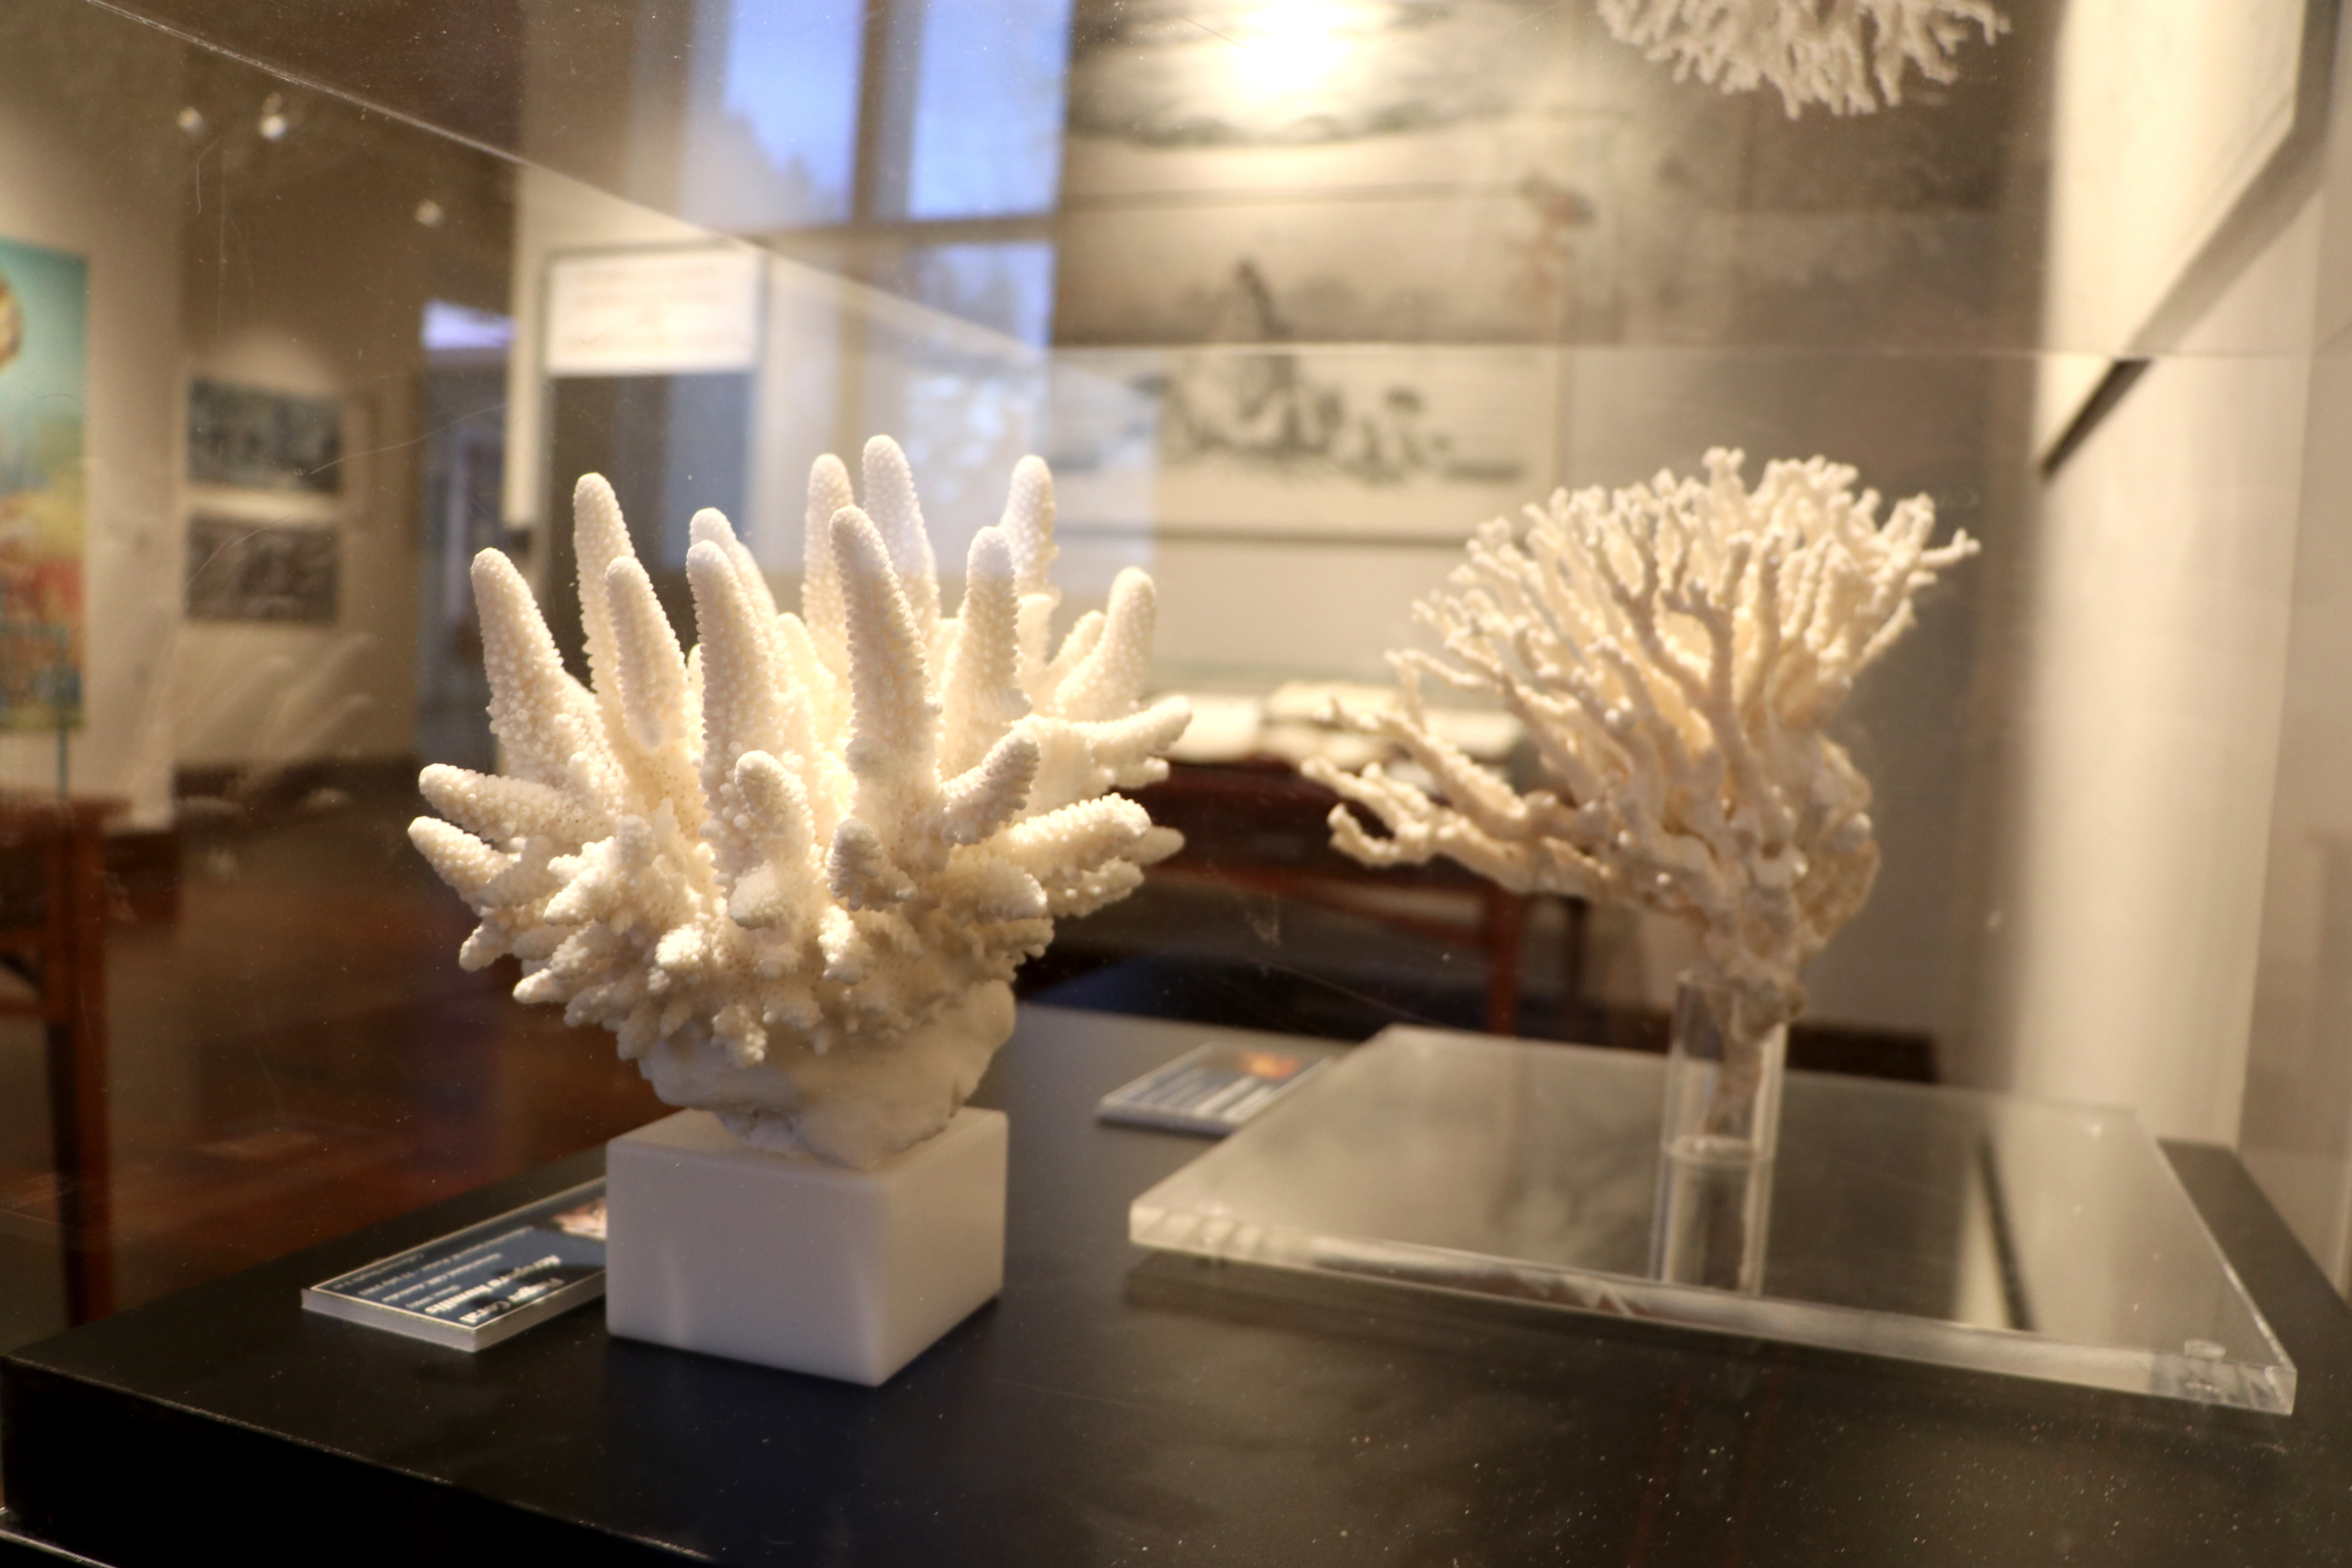 White coral skeletons on display